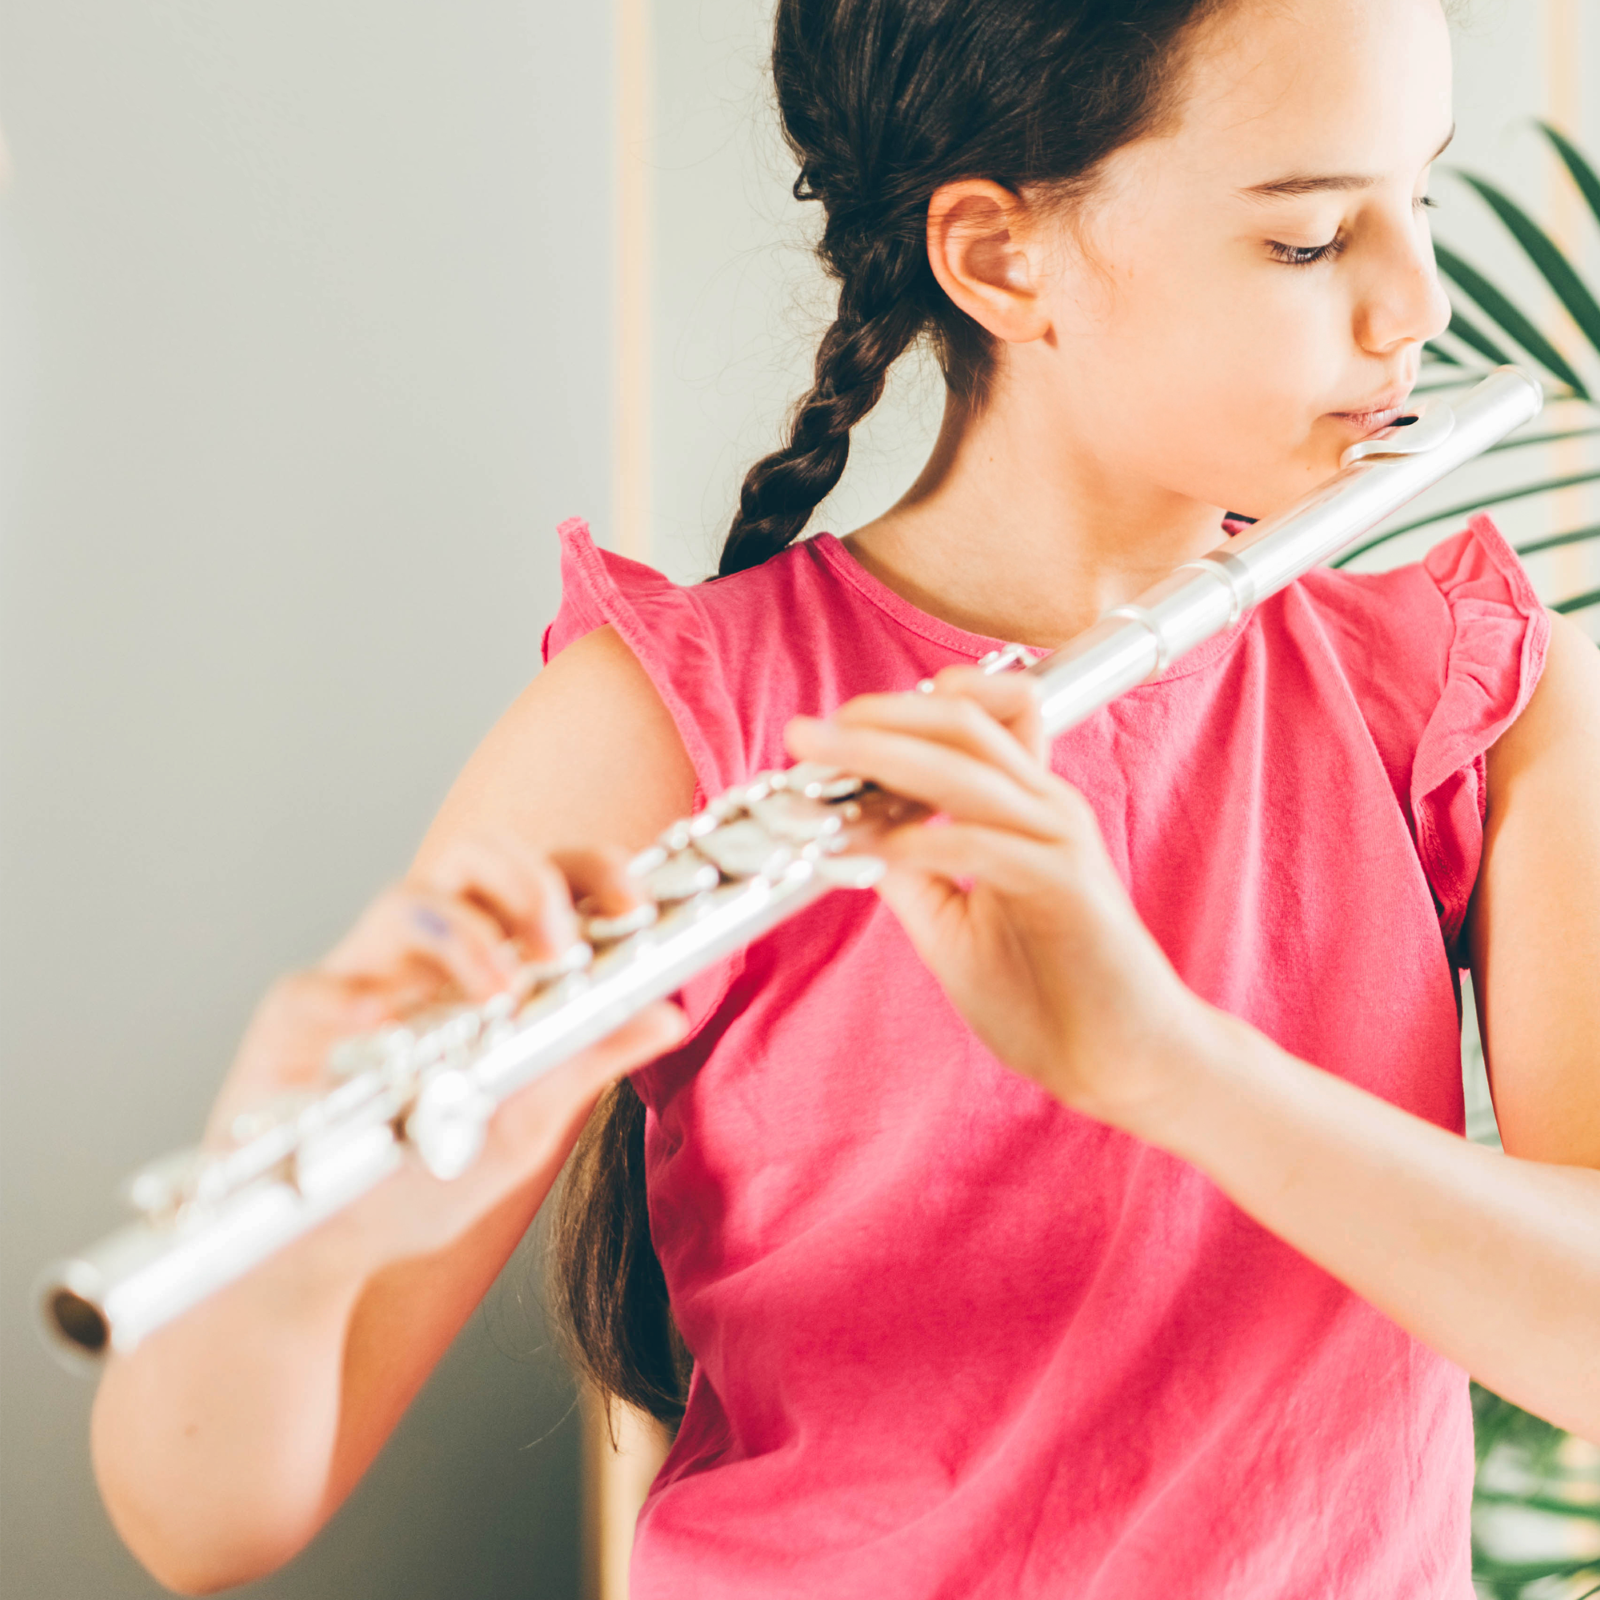 Adult flute lesson 30 minutes : photo 1